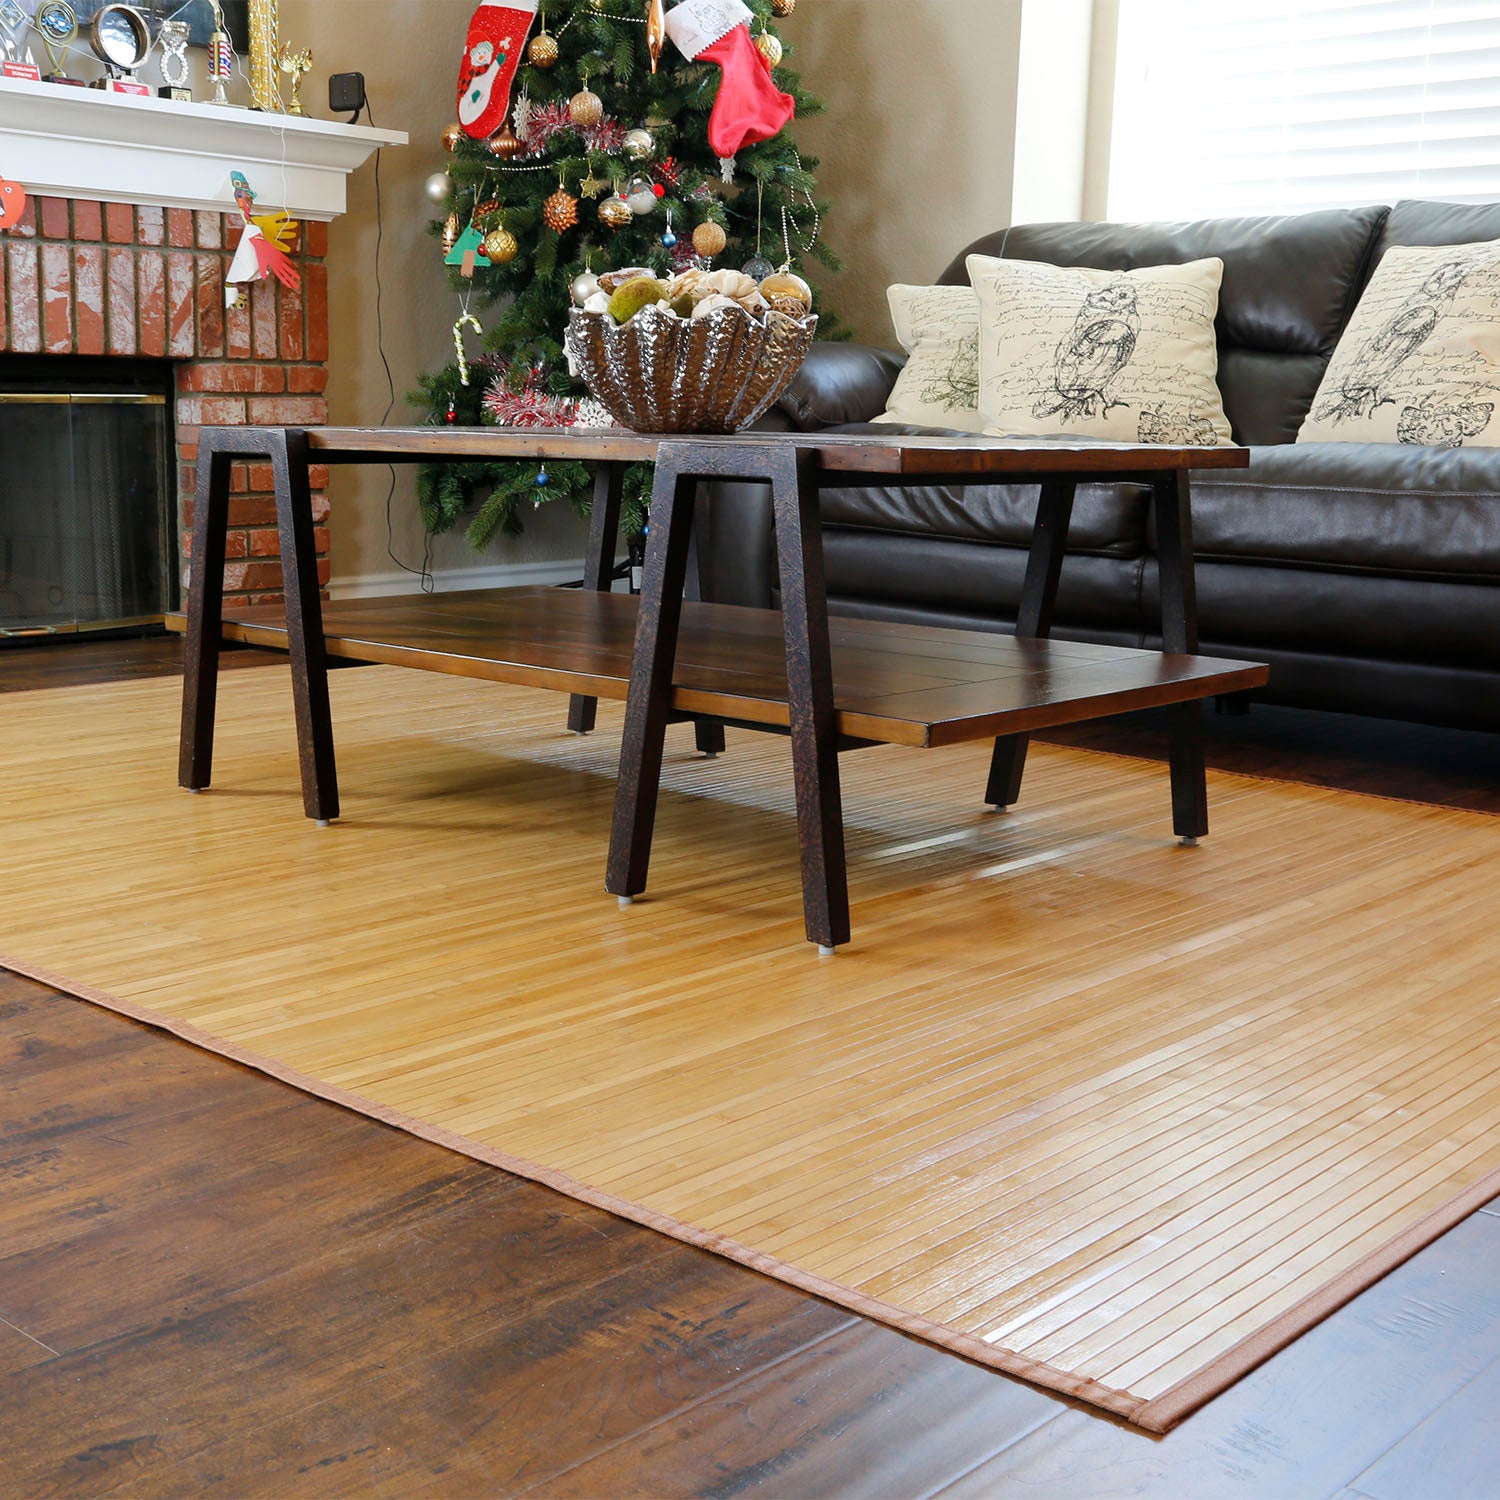 5' x 8' Bamboo Area Rug Floor Carpet